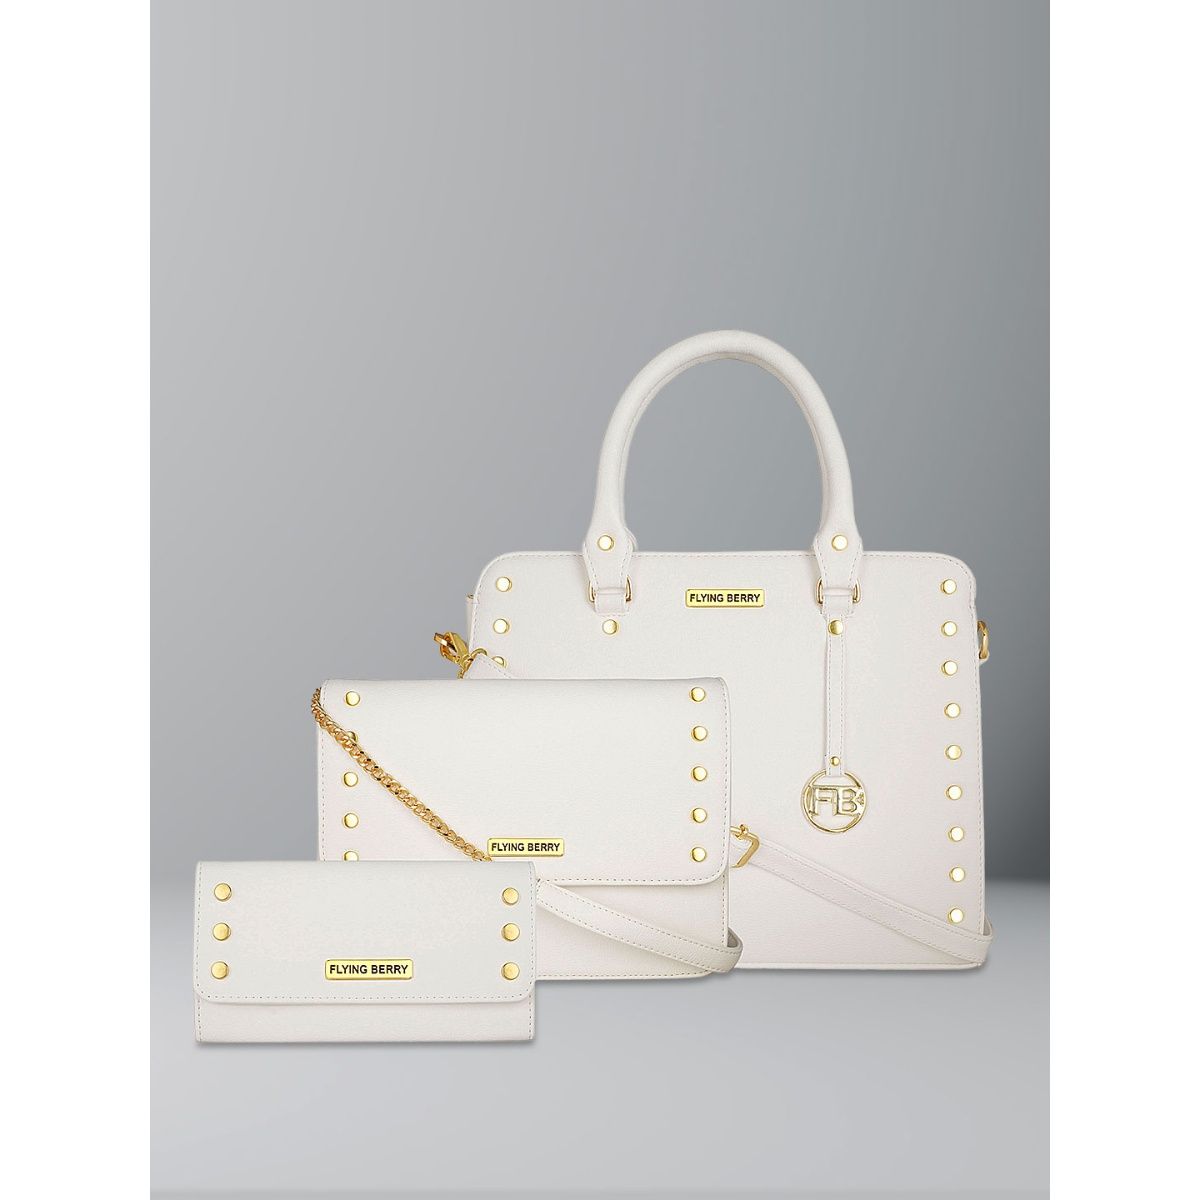 Women's Handbag, Sling Bag, Purse and Card Wallet Combo(Set Of 4), Free  shipping | eBay